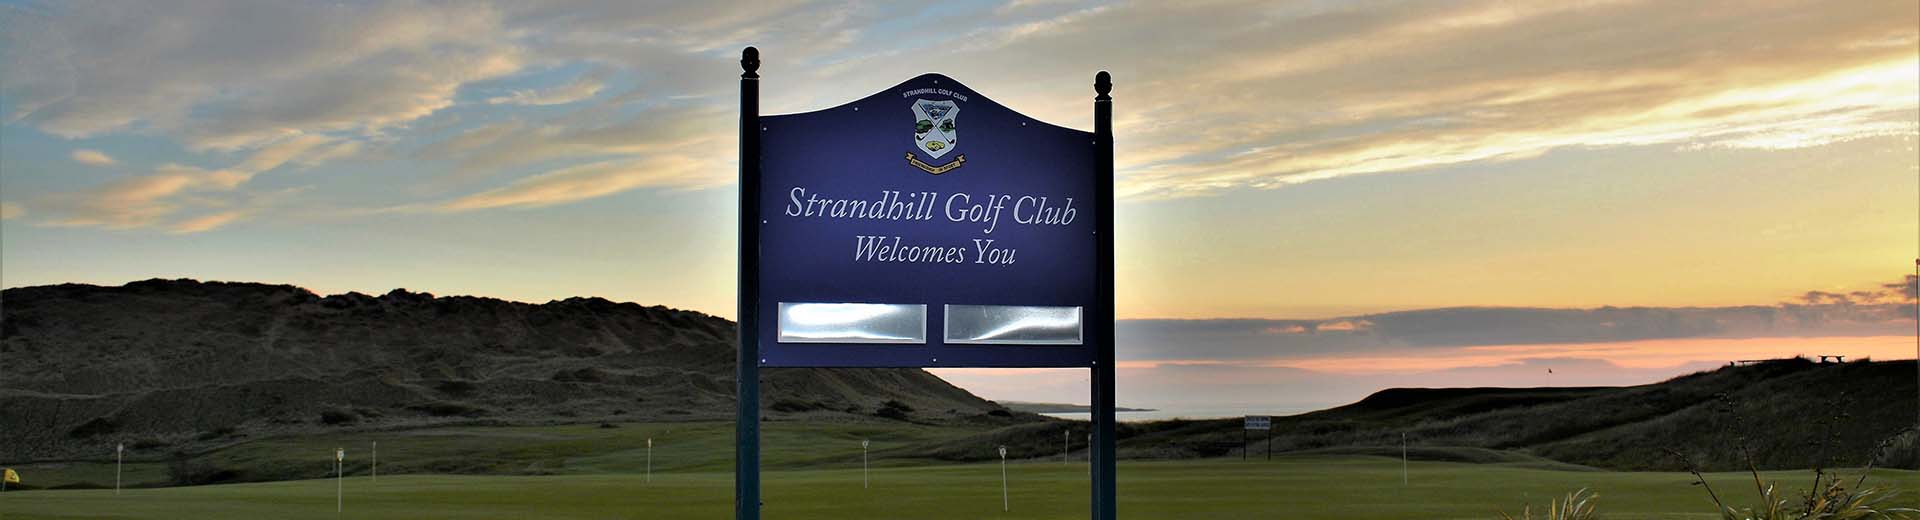 Strandhill Golf Club welcome sign